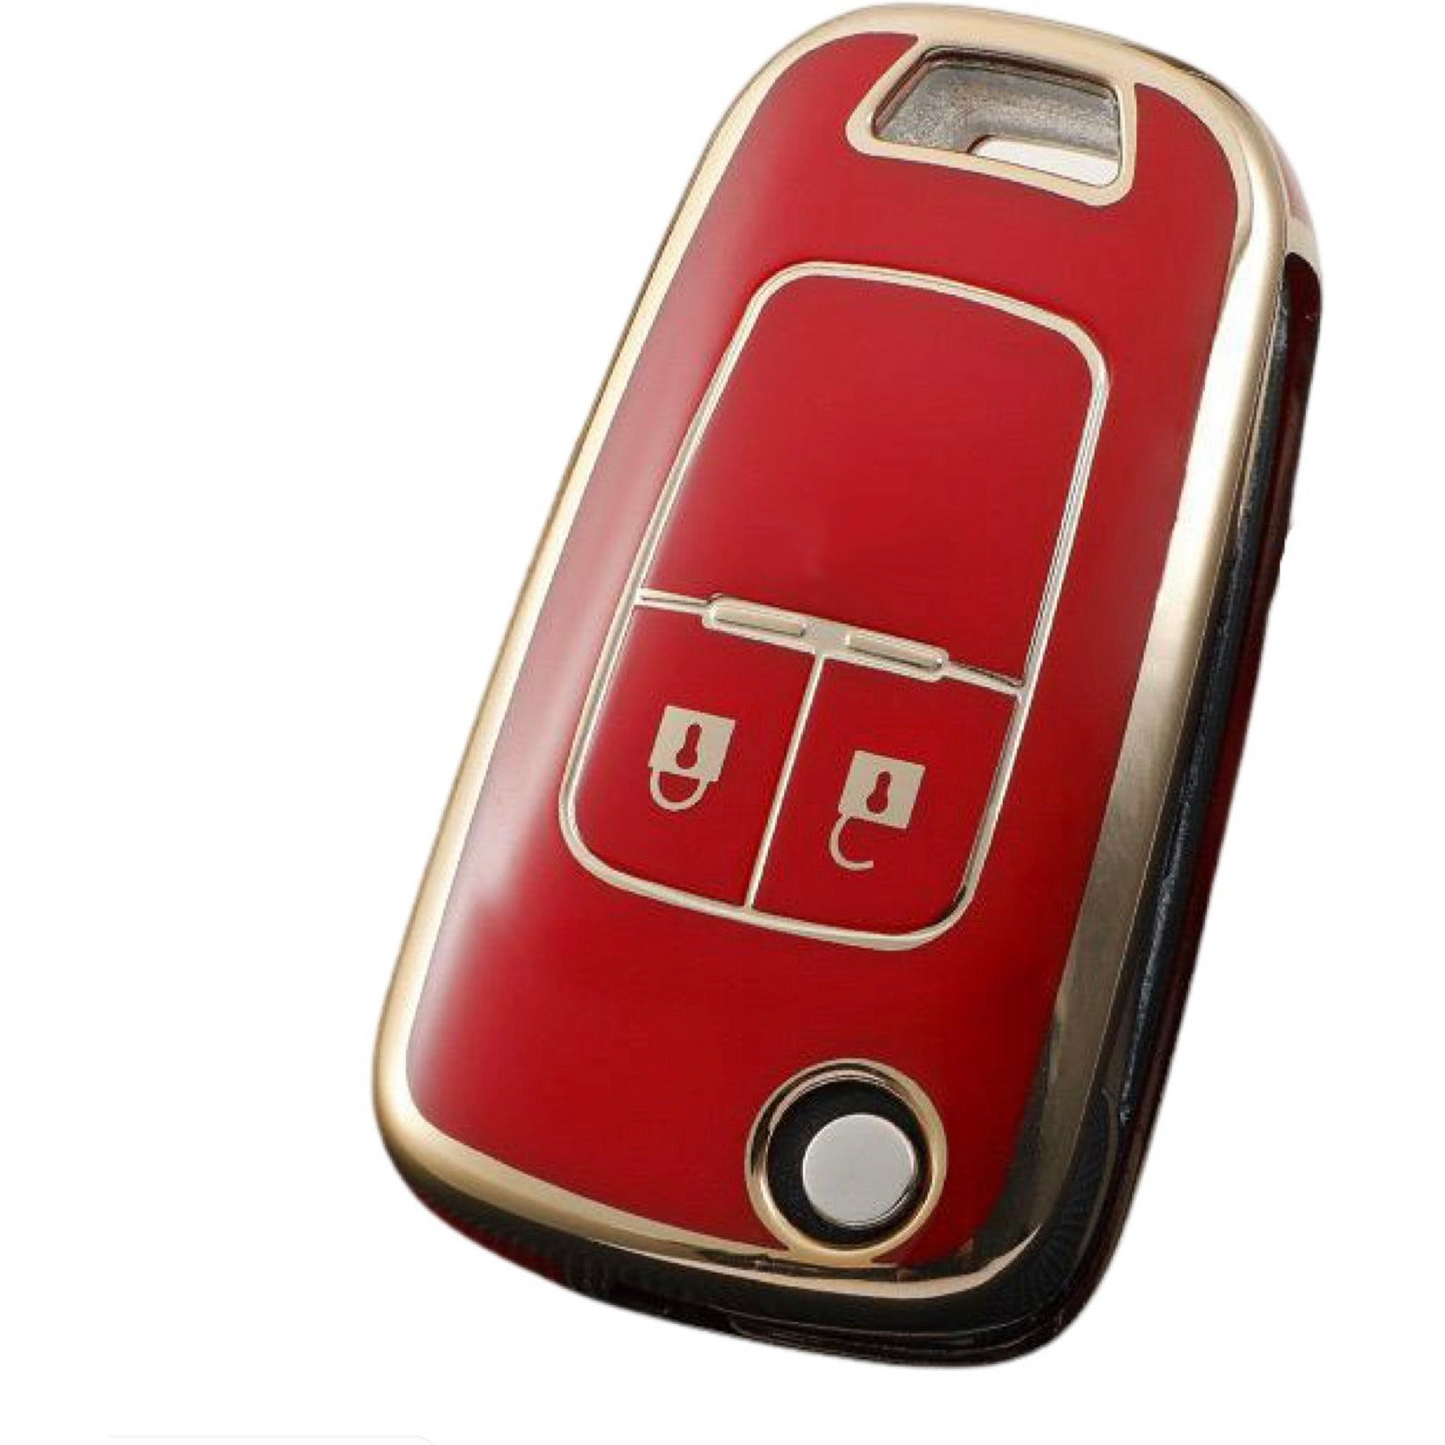 Holden Key Cover - 2 button  | Trailblazer, Colorado, Commodore|key fob cover accessory